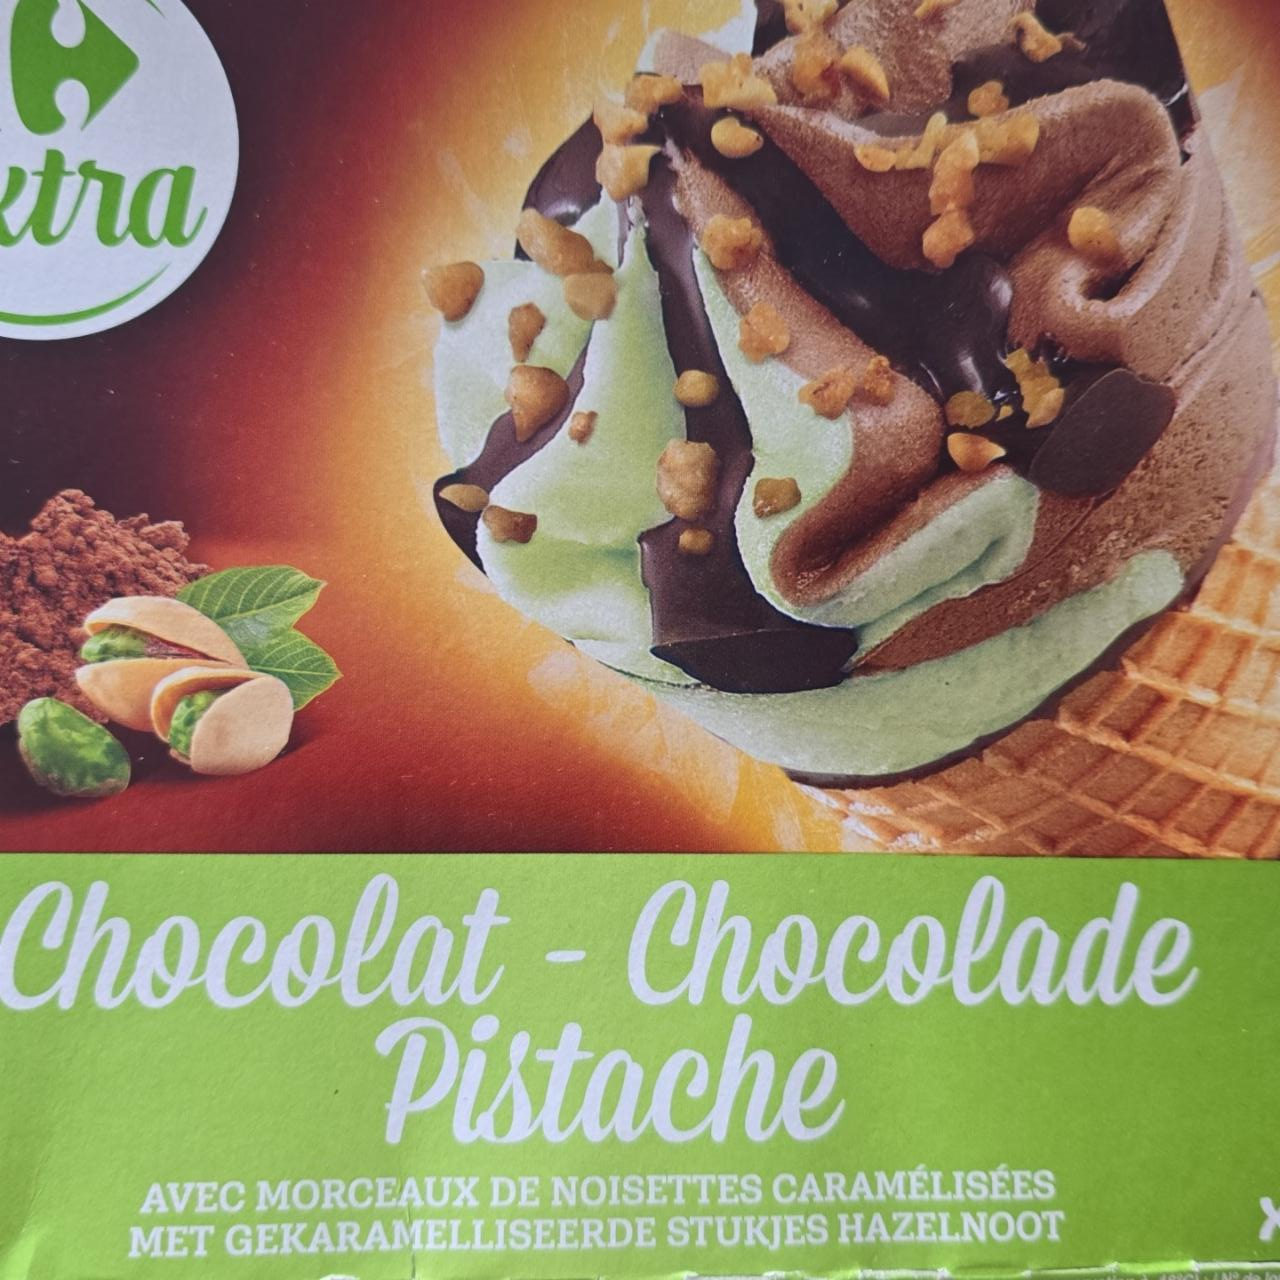 Fotografie - Chocolat pistache Carrefour Extra